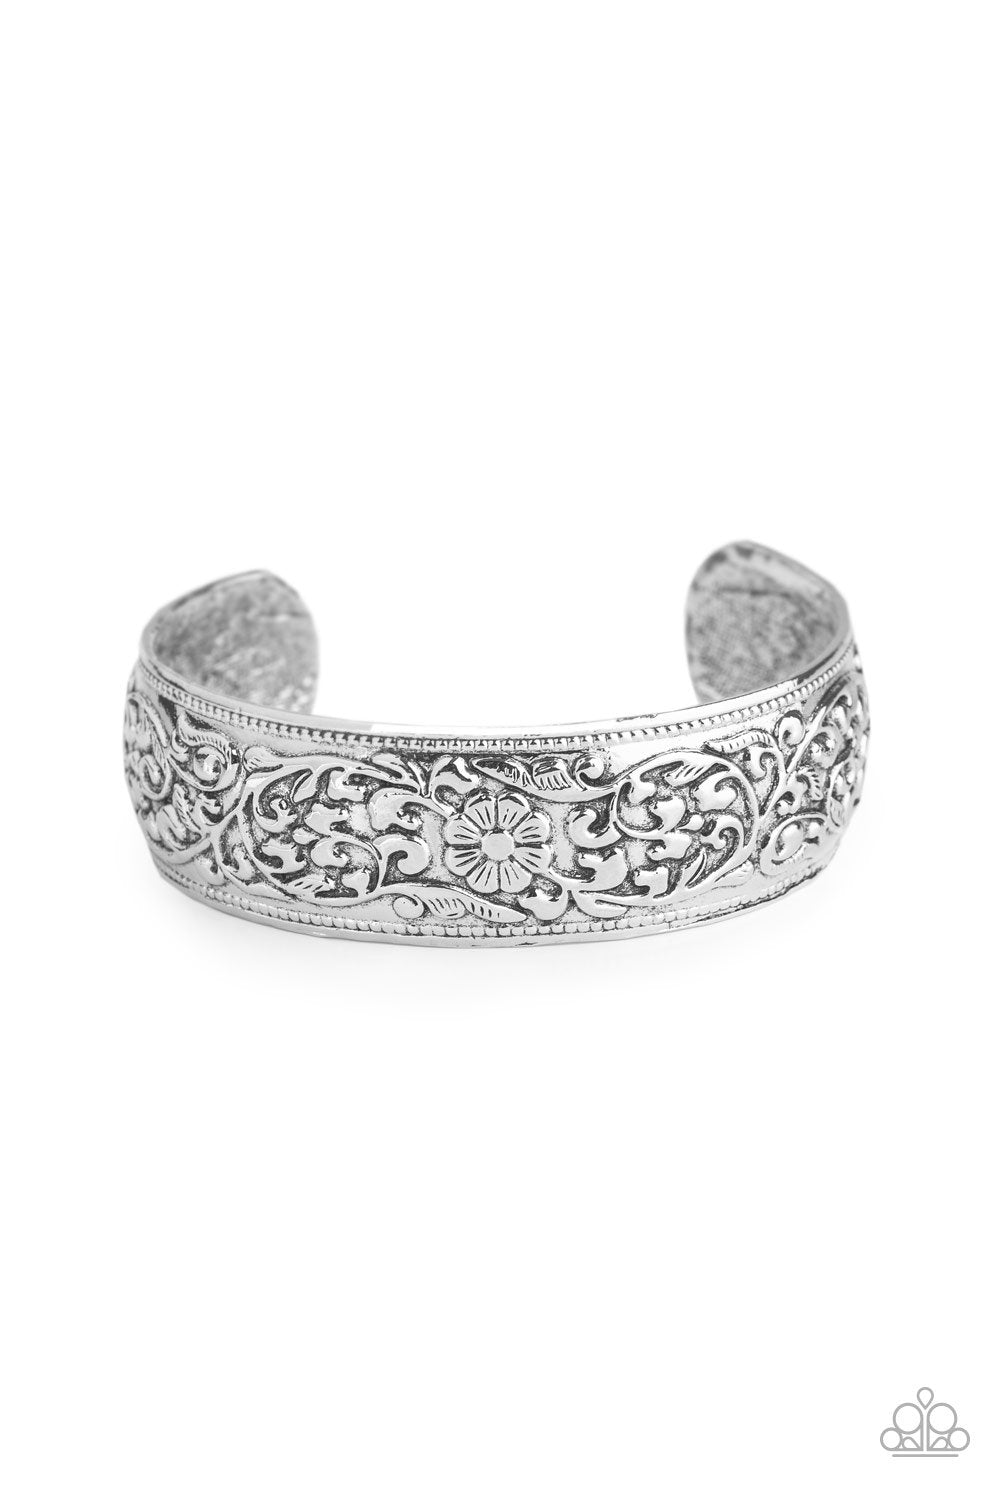 Garden Tropic Silver Floral Cuff Bracelet - Paparazzi Accessories - lightbox -CarasShop.com - $5 Jewelry by Cara Jewels